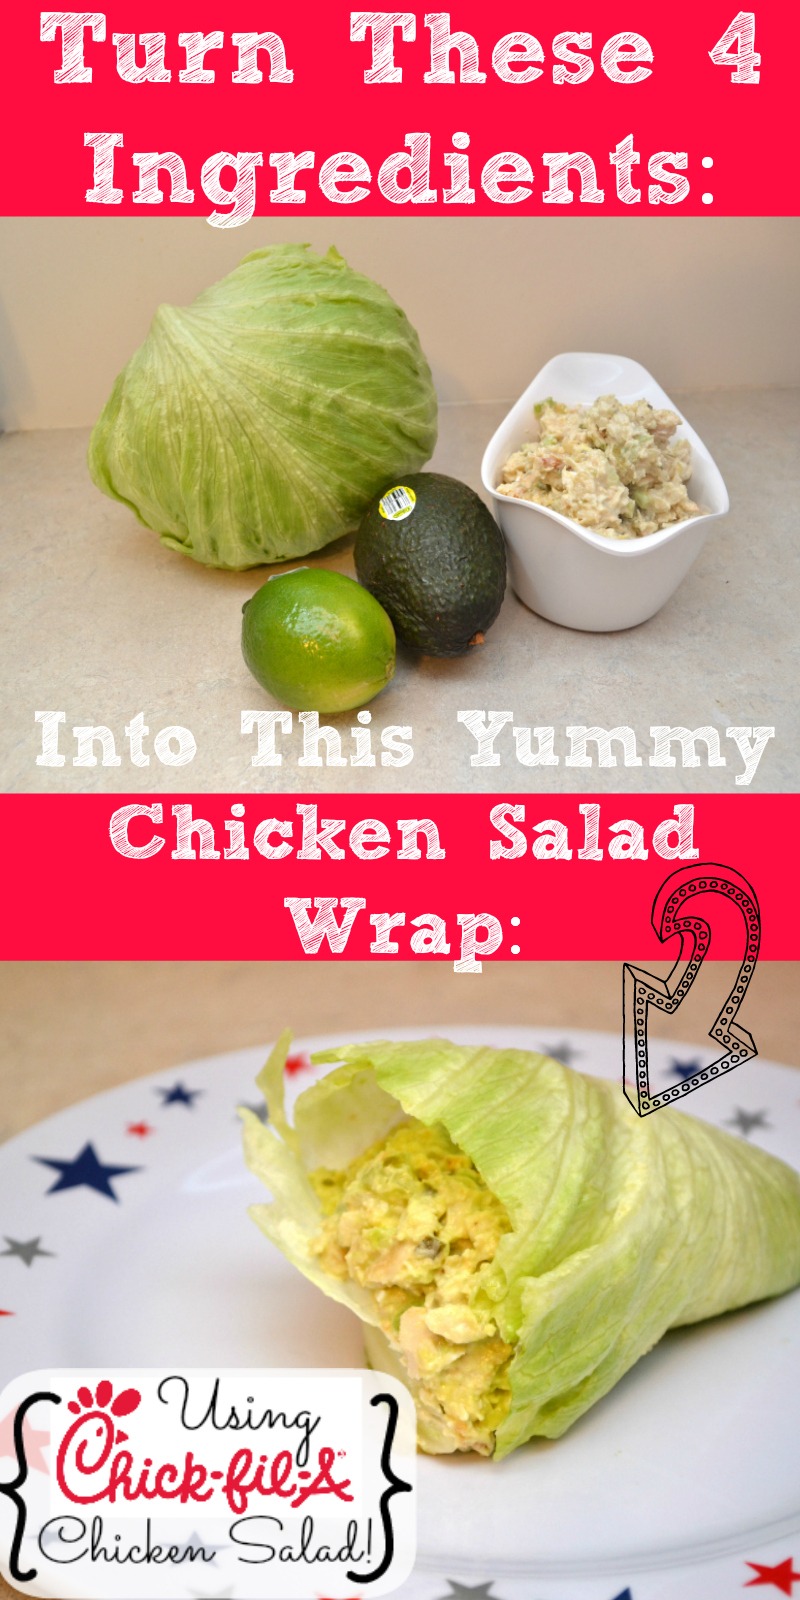 Chicken Salad Wrap using Chick-fil-A Chicken Salad | Optimistic Mommy #ChickfilA #CFAMoms #Chicken #Recipe